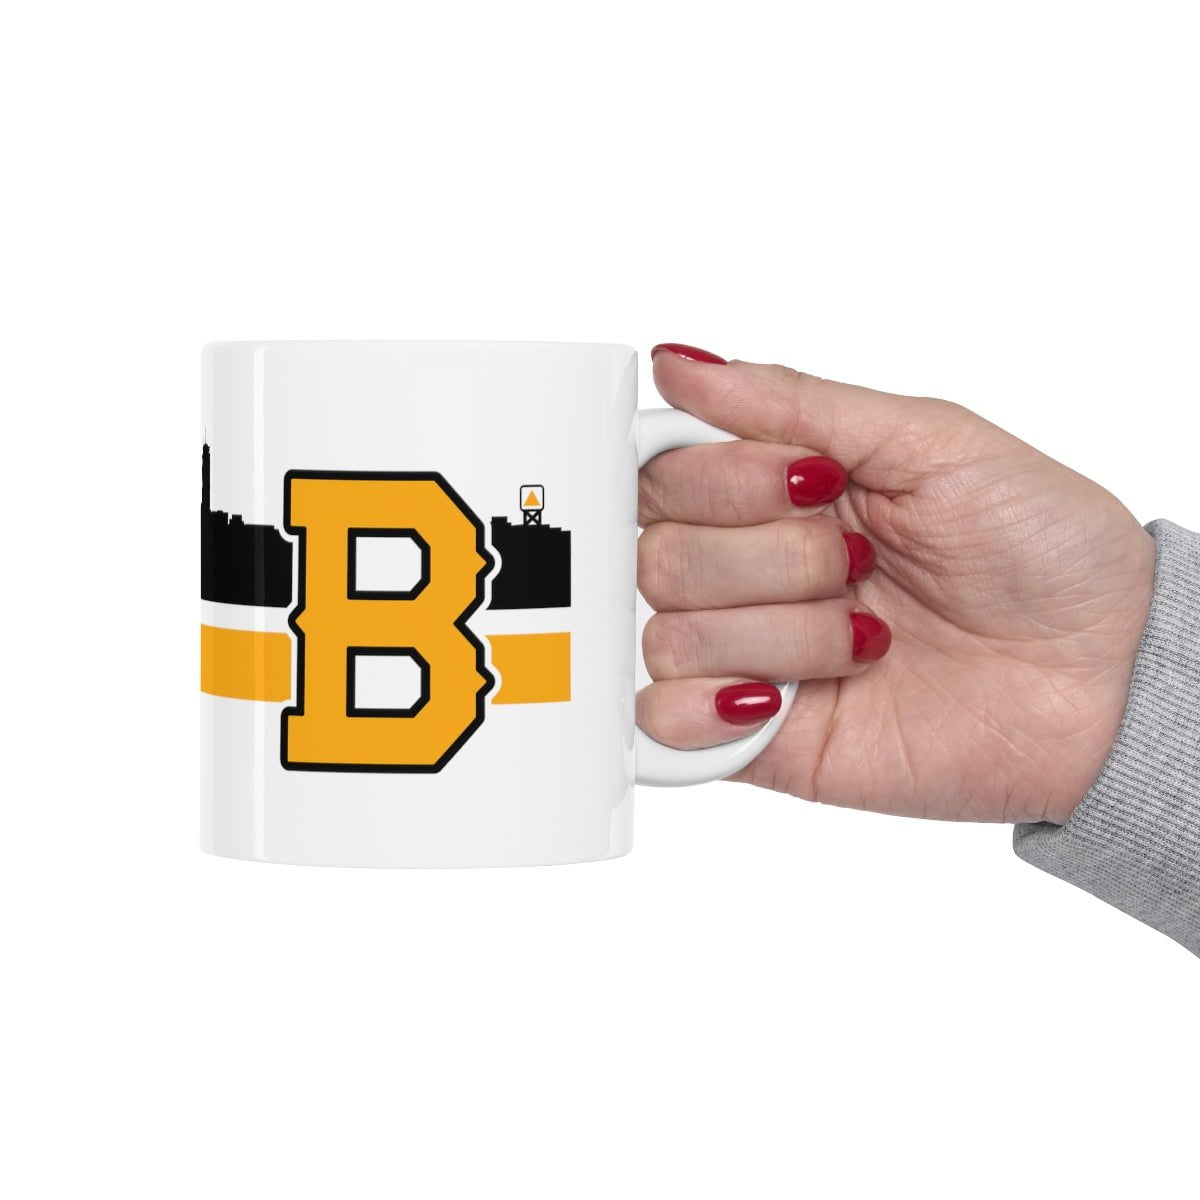 Boston B Black & Gold Sideline 11oz Coffee Mug - Chowdaheadz